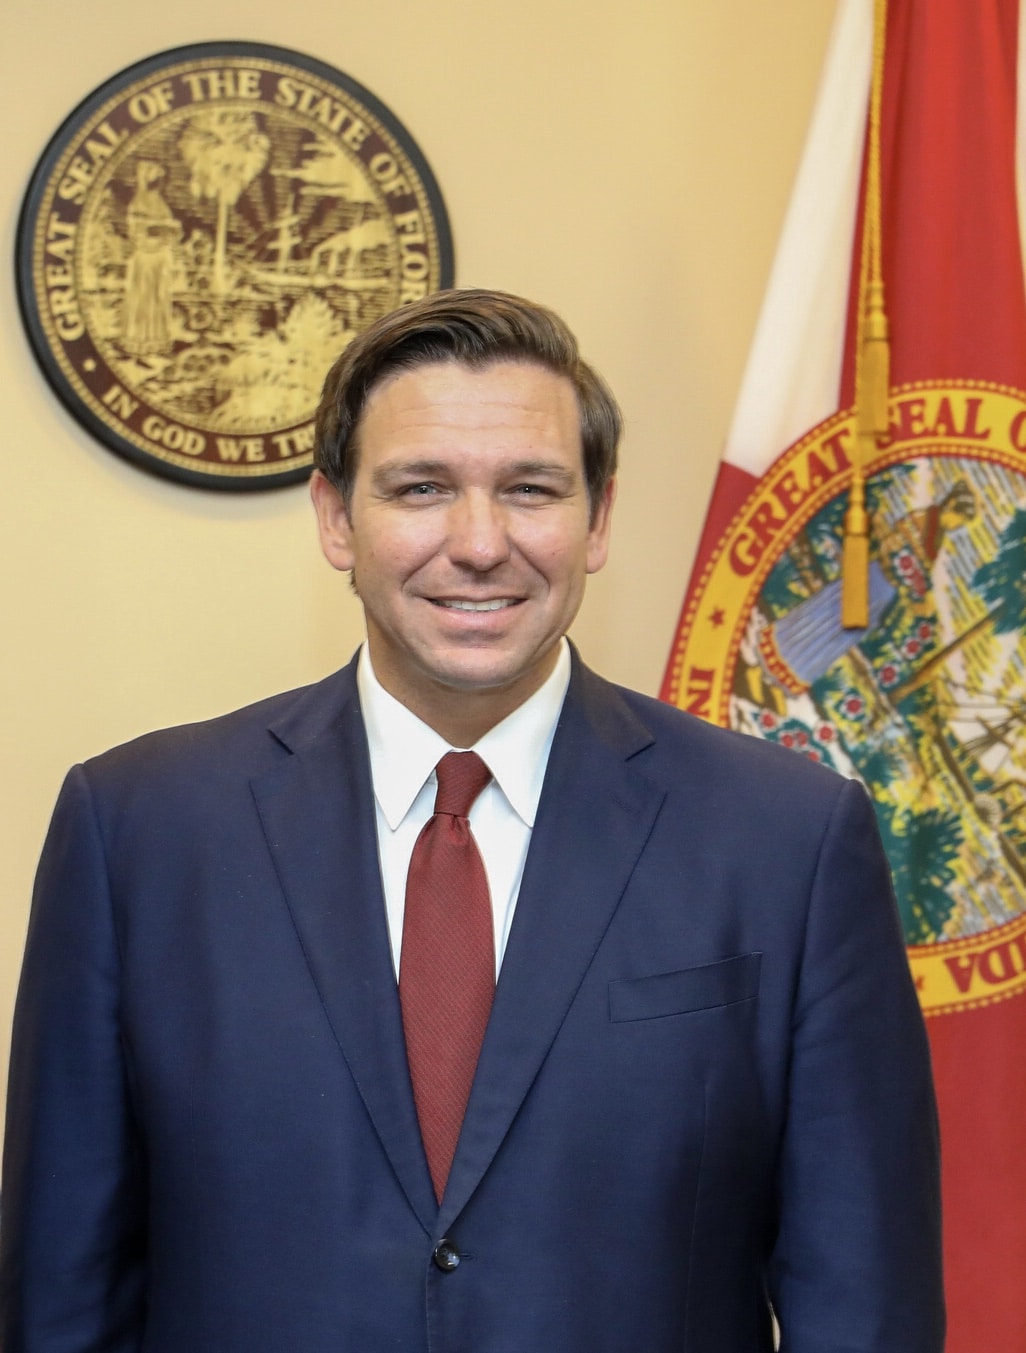 Florida Governor’s Attack on ‘Big Tech’ Violates U.S. Constitution